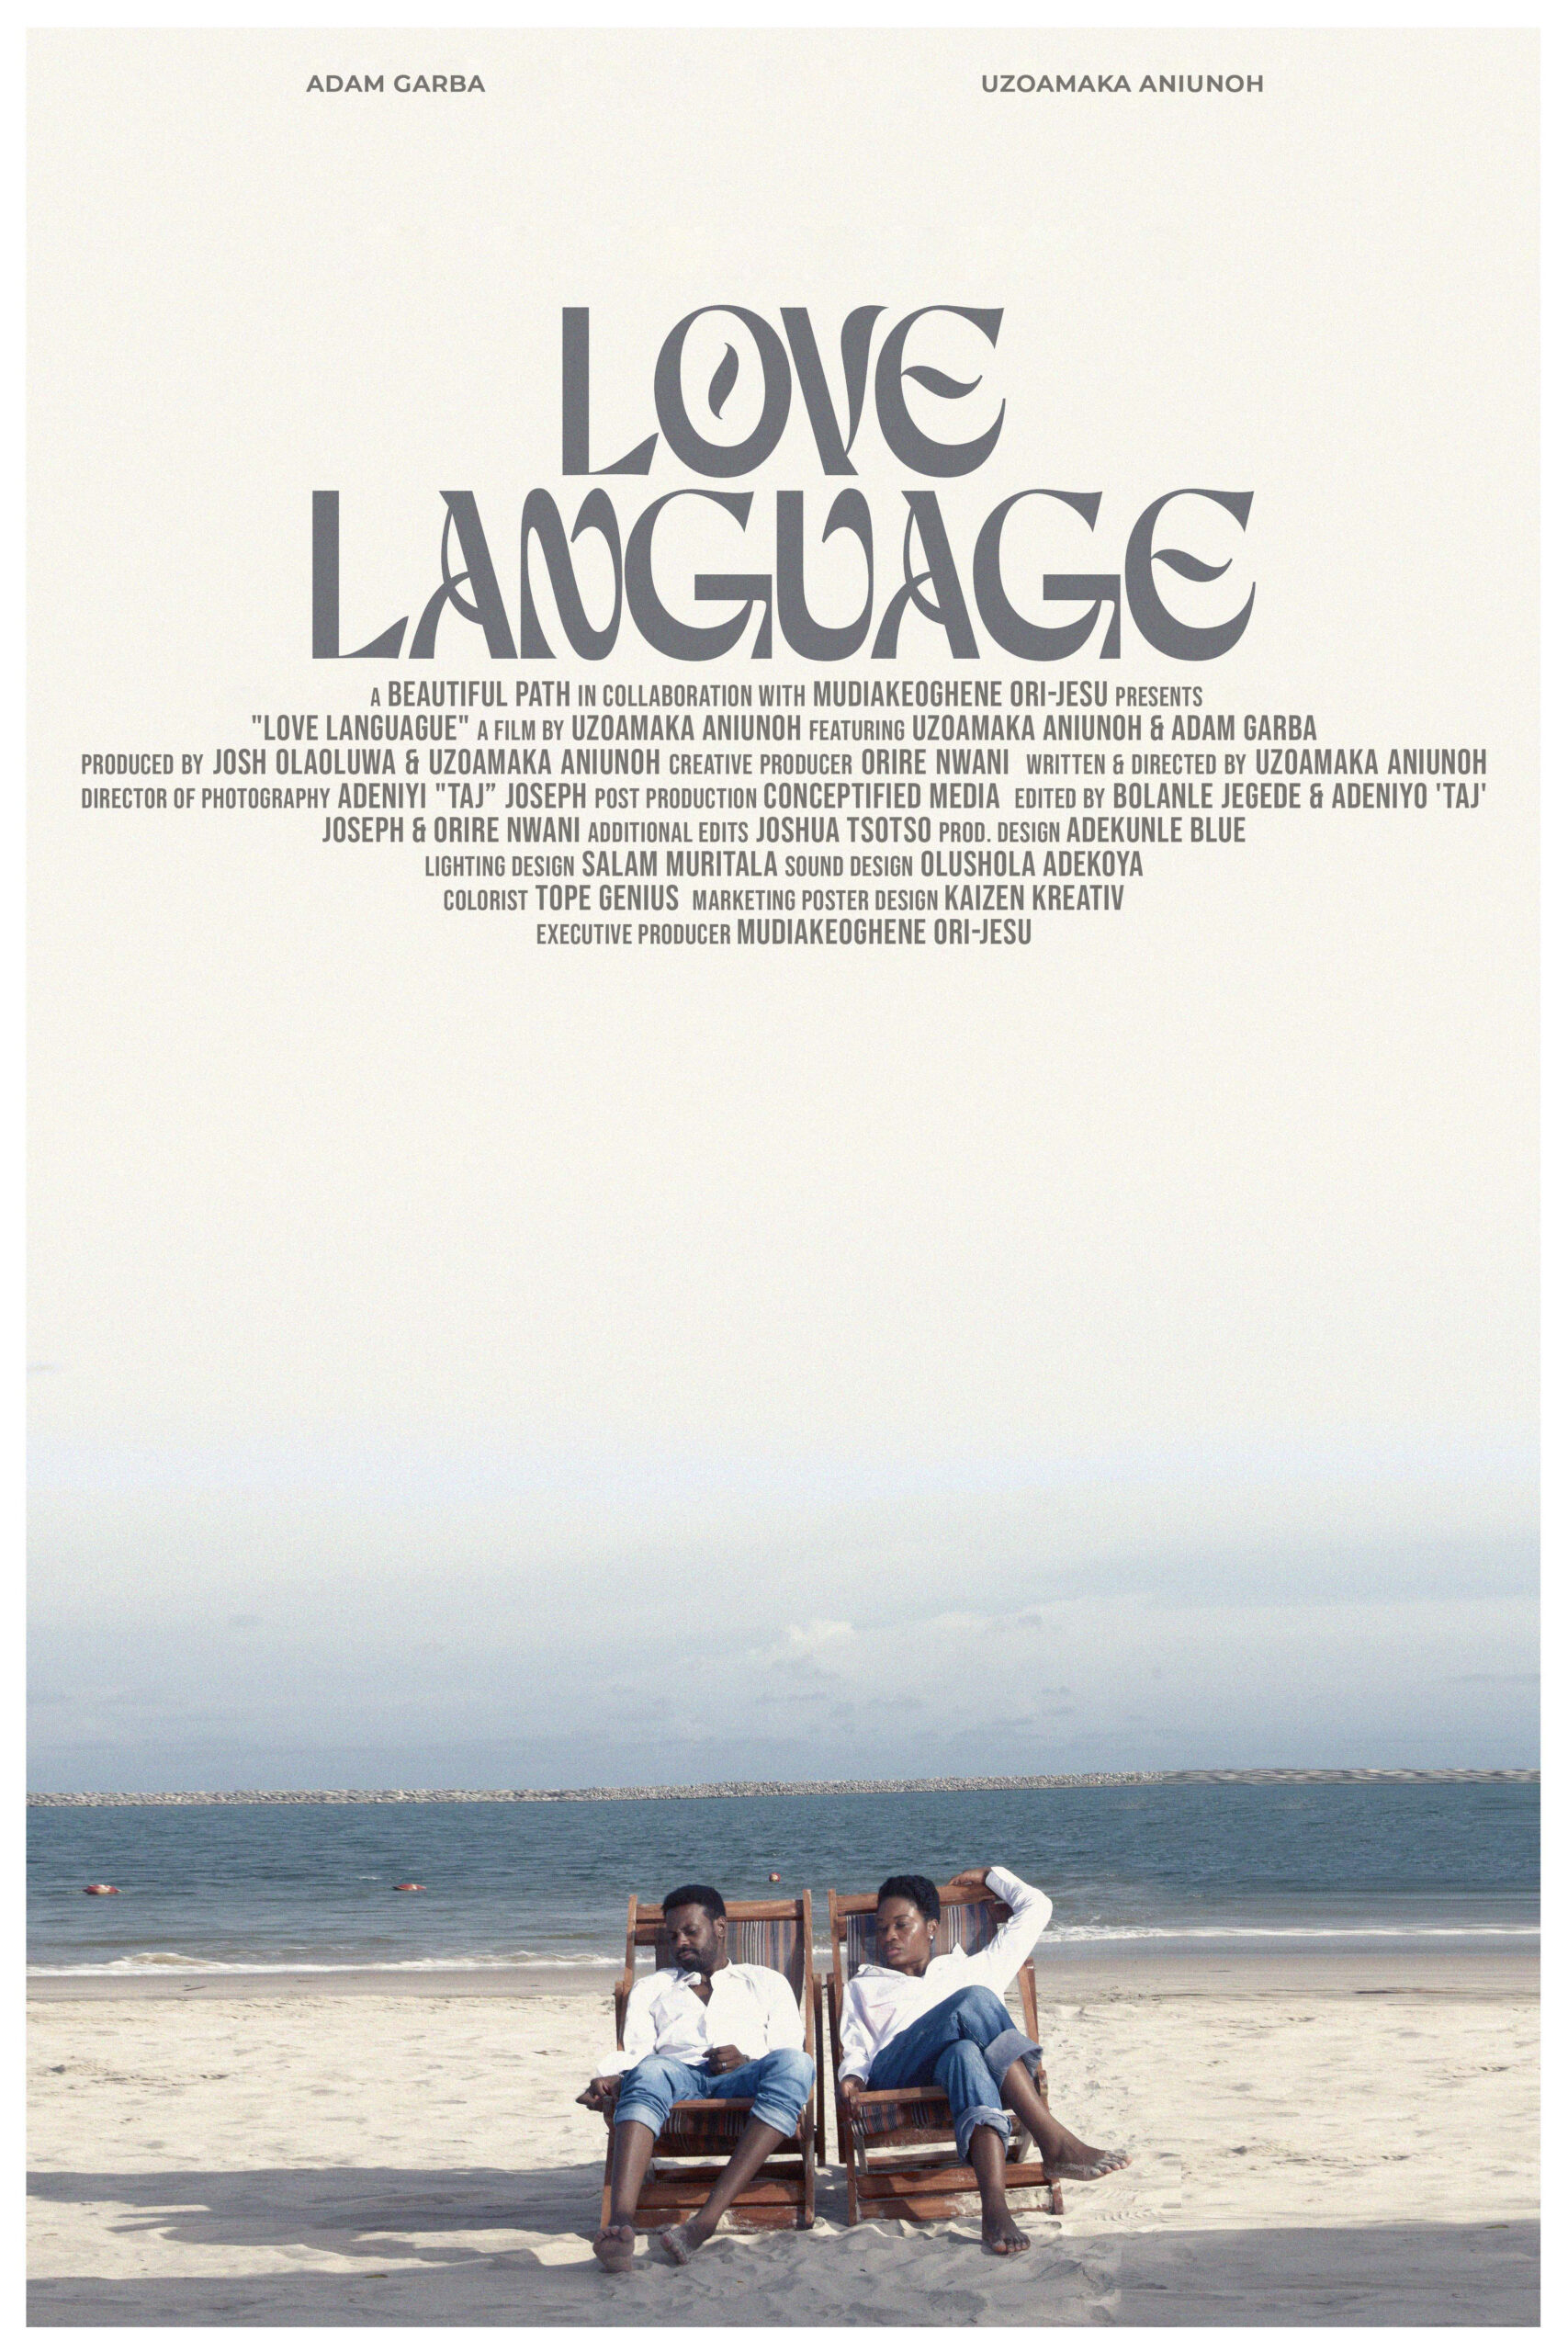 IMG 1569 scaled - Uzoamaka Aniunoh Makes Directing Debut With Inter Tribal Title “Love Language”